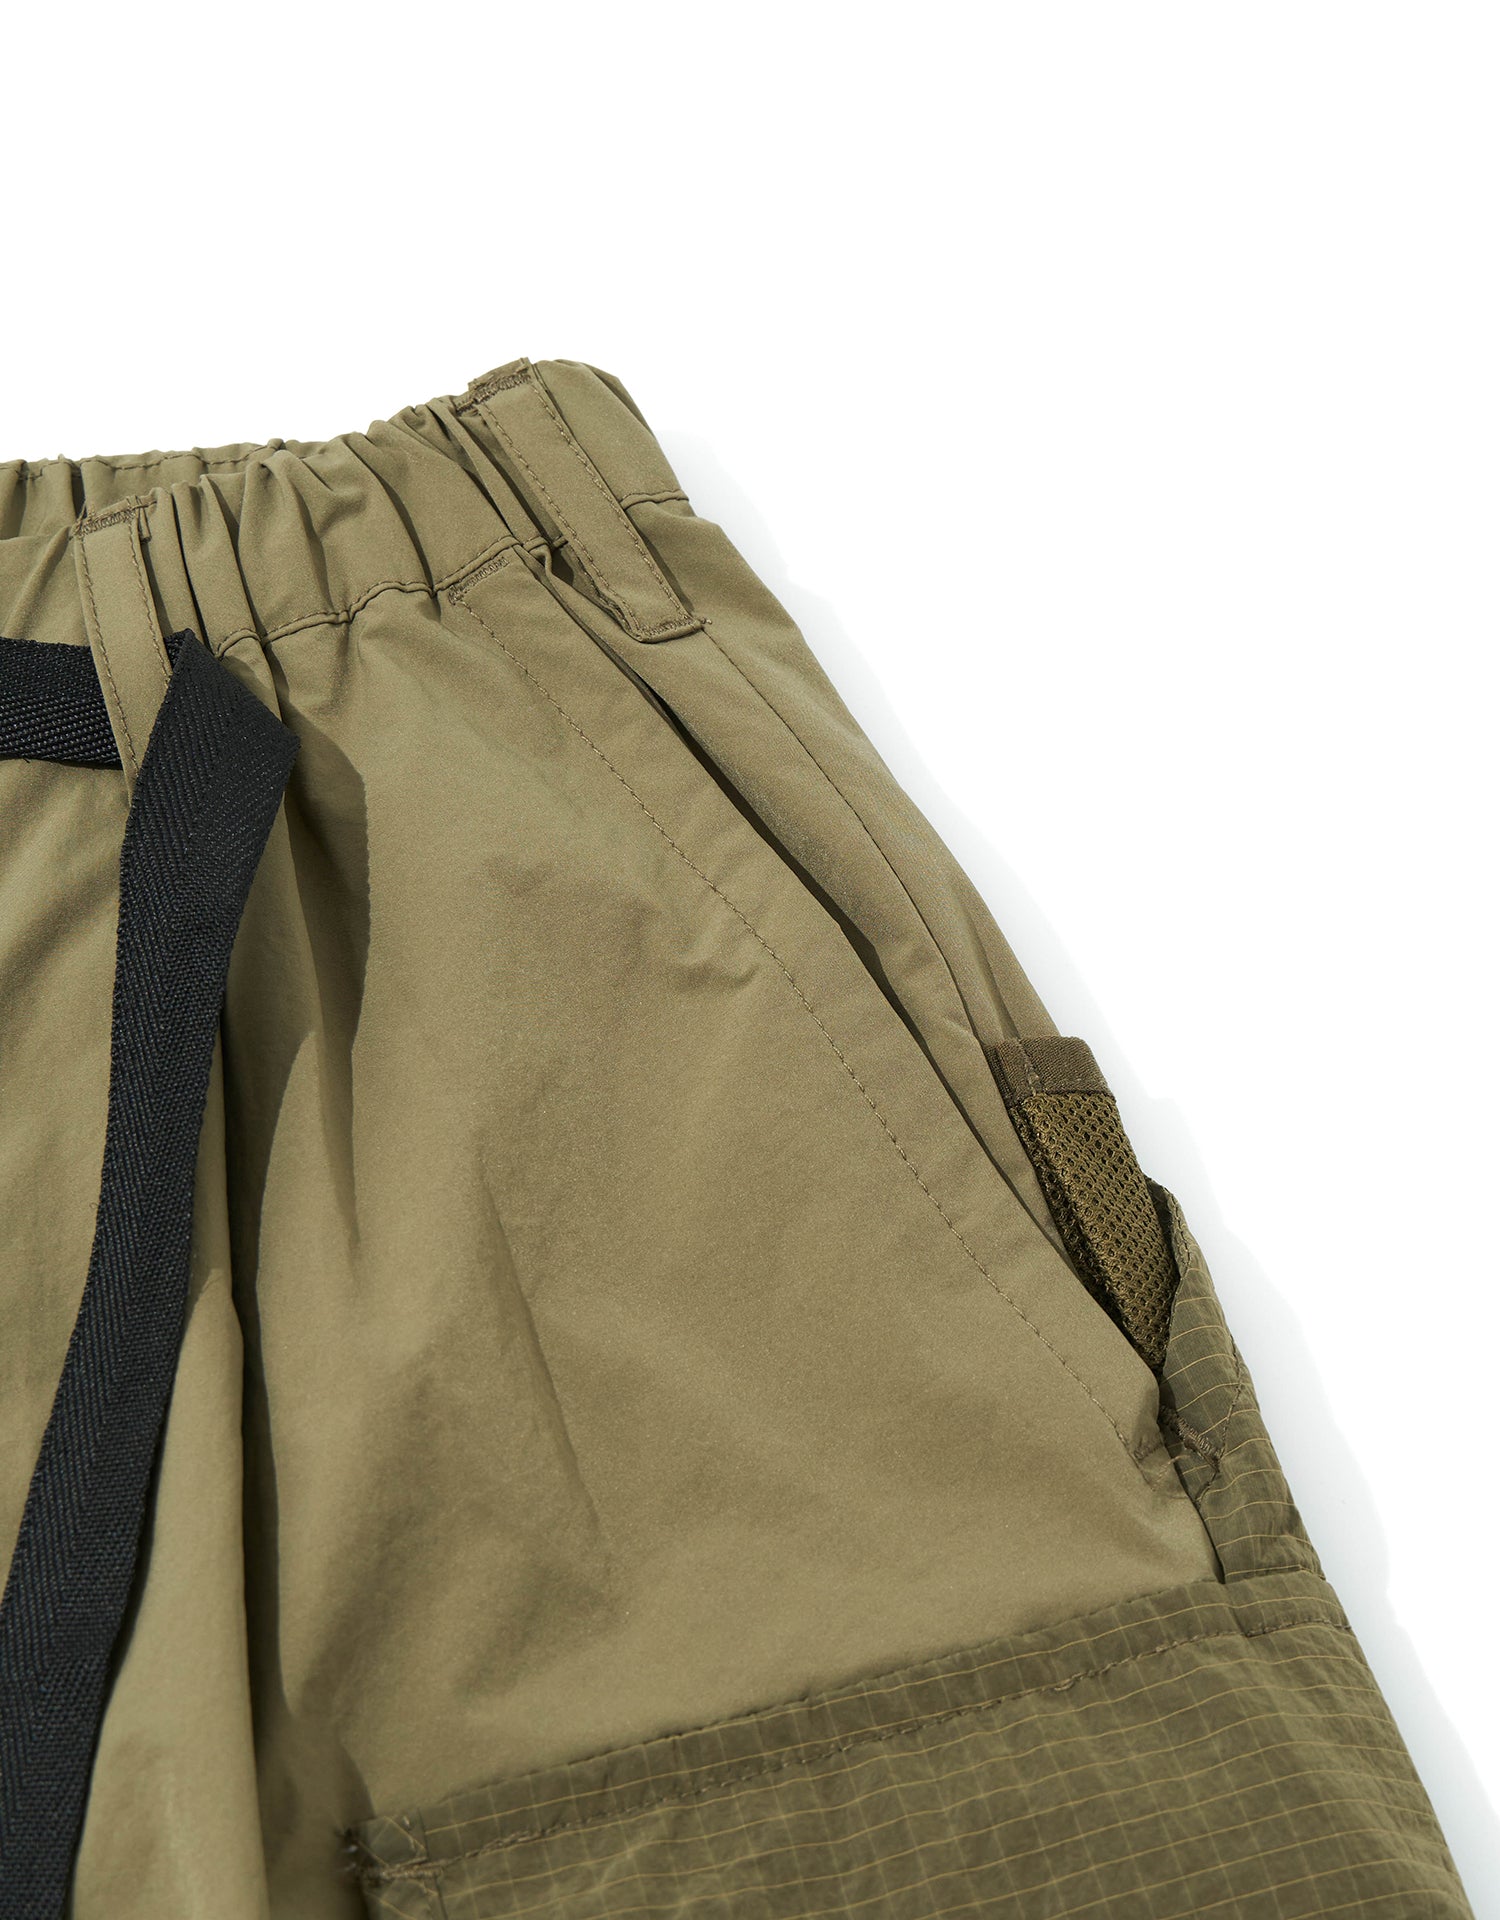 M.T. Ten Pockets Light Outdoor Cargo Shorts